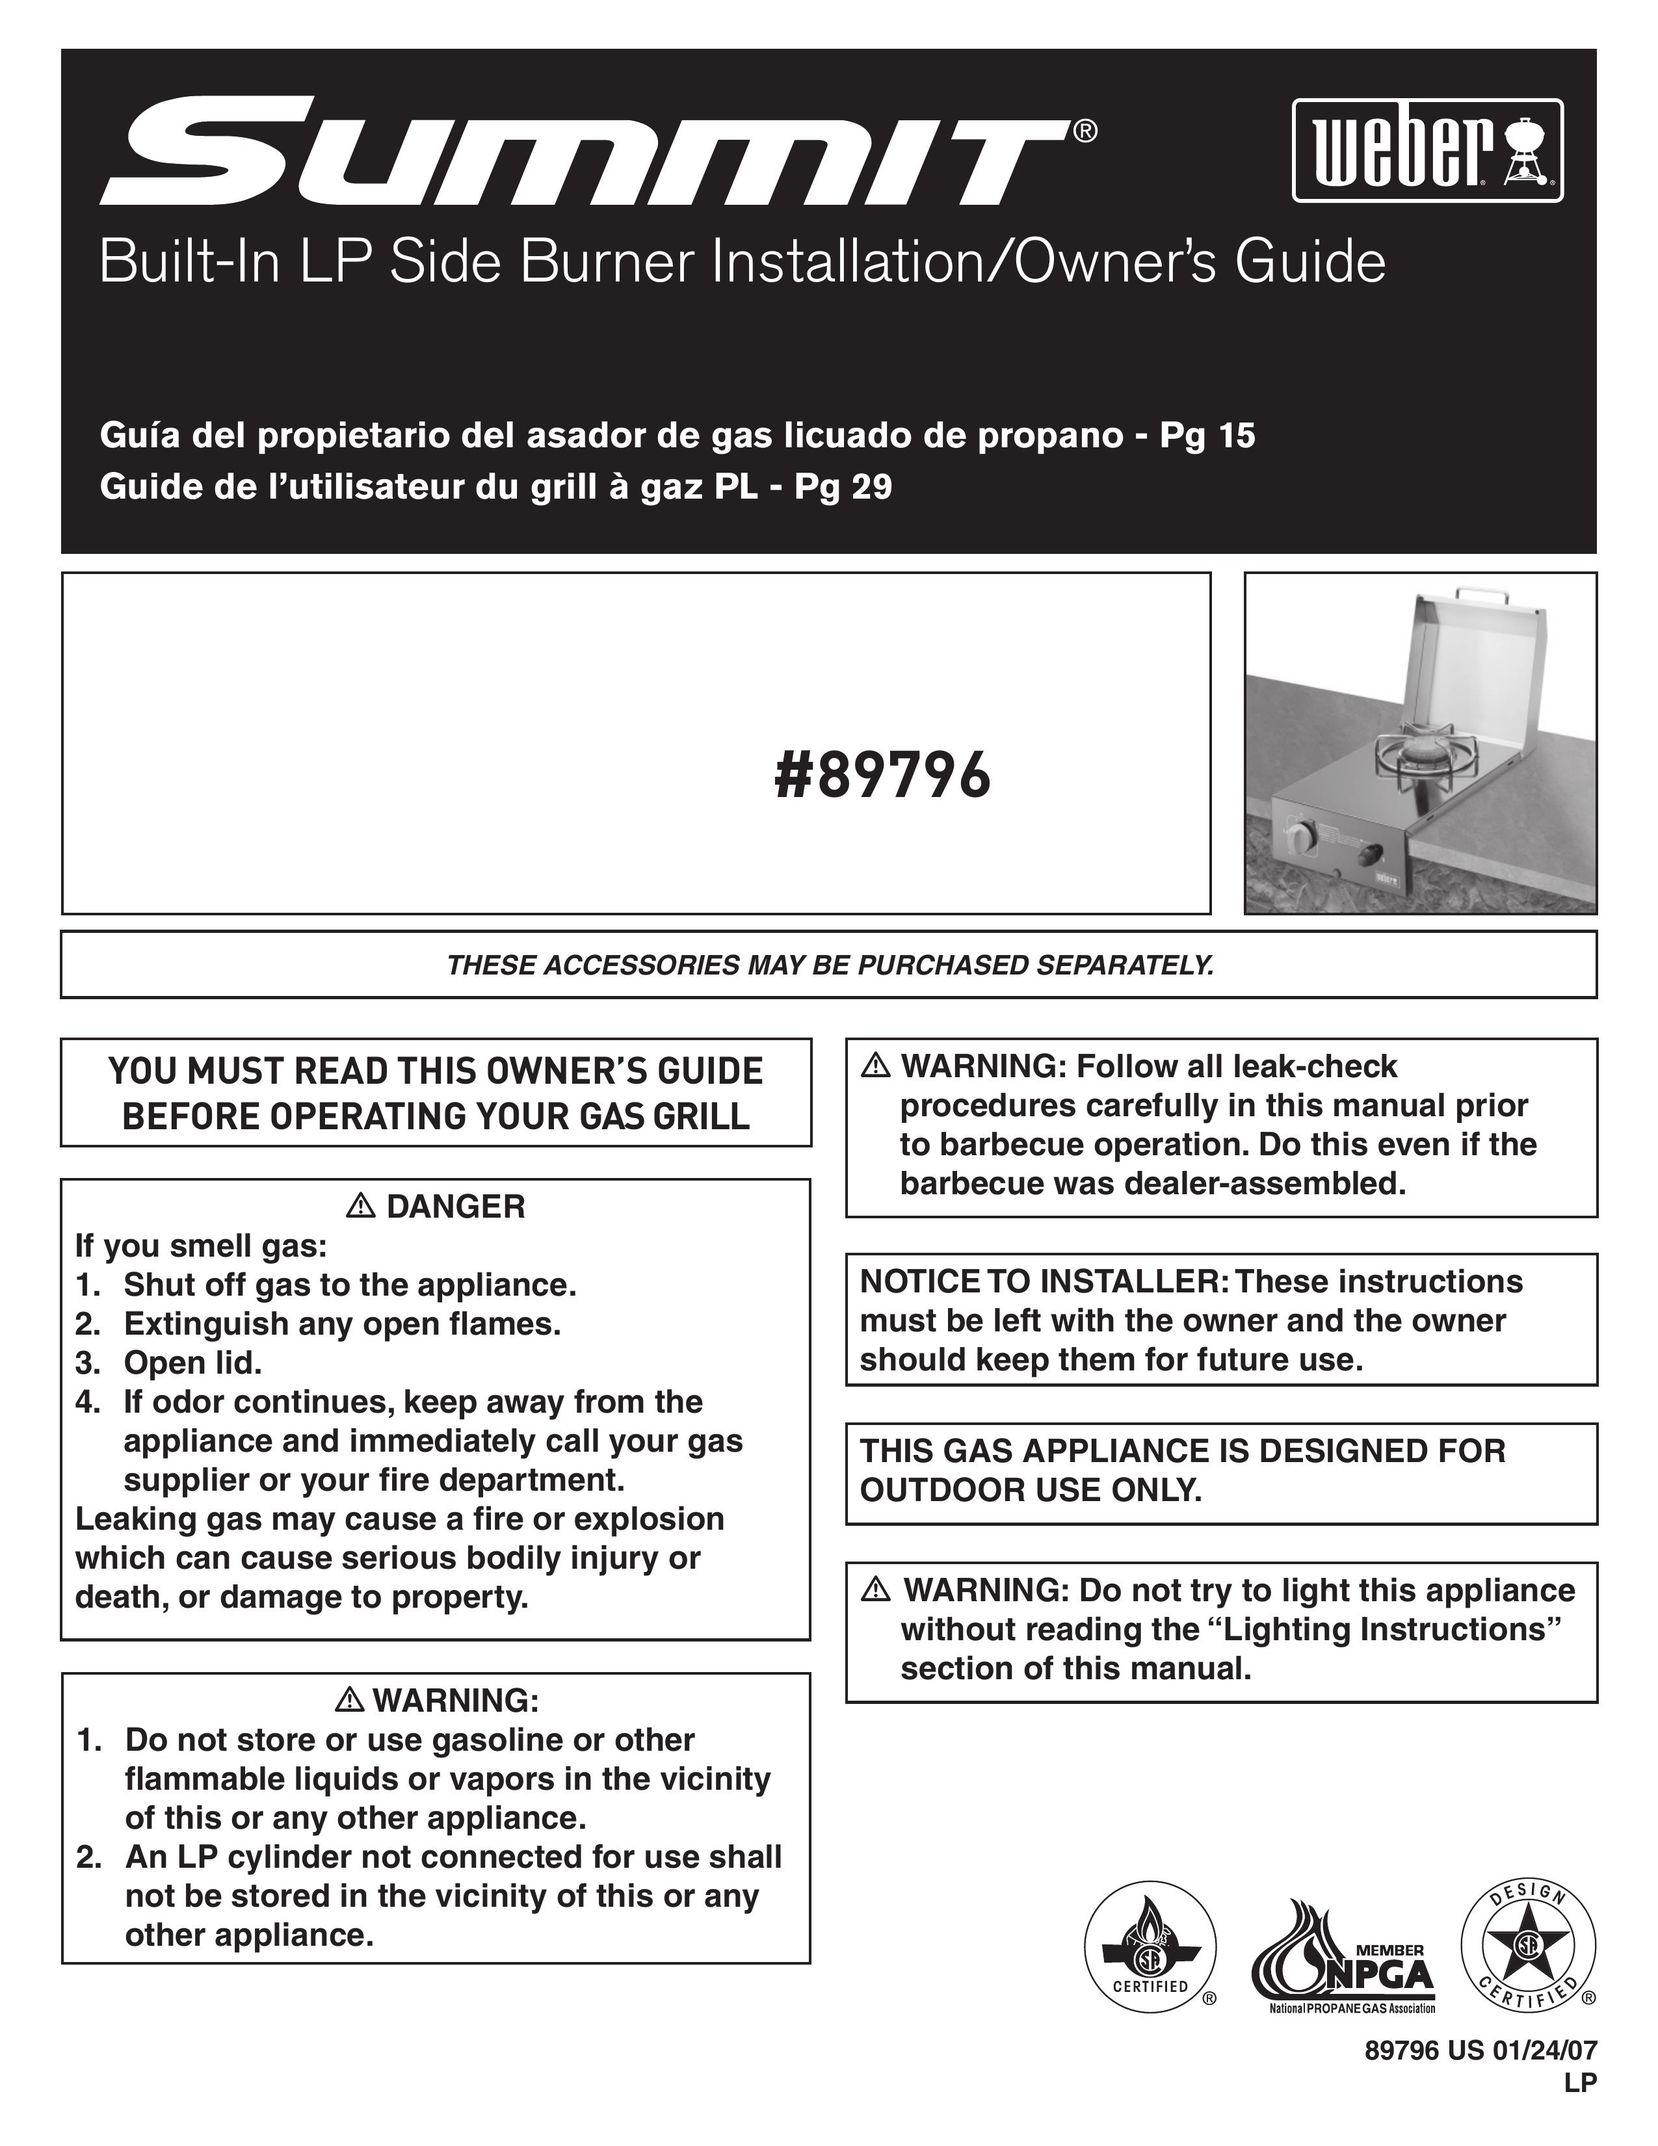 Weber 89796 Burner User Manual